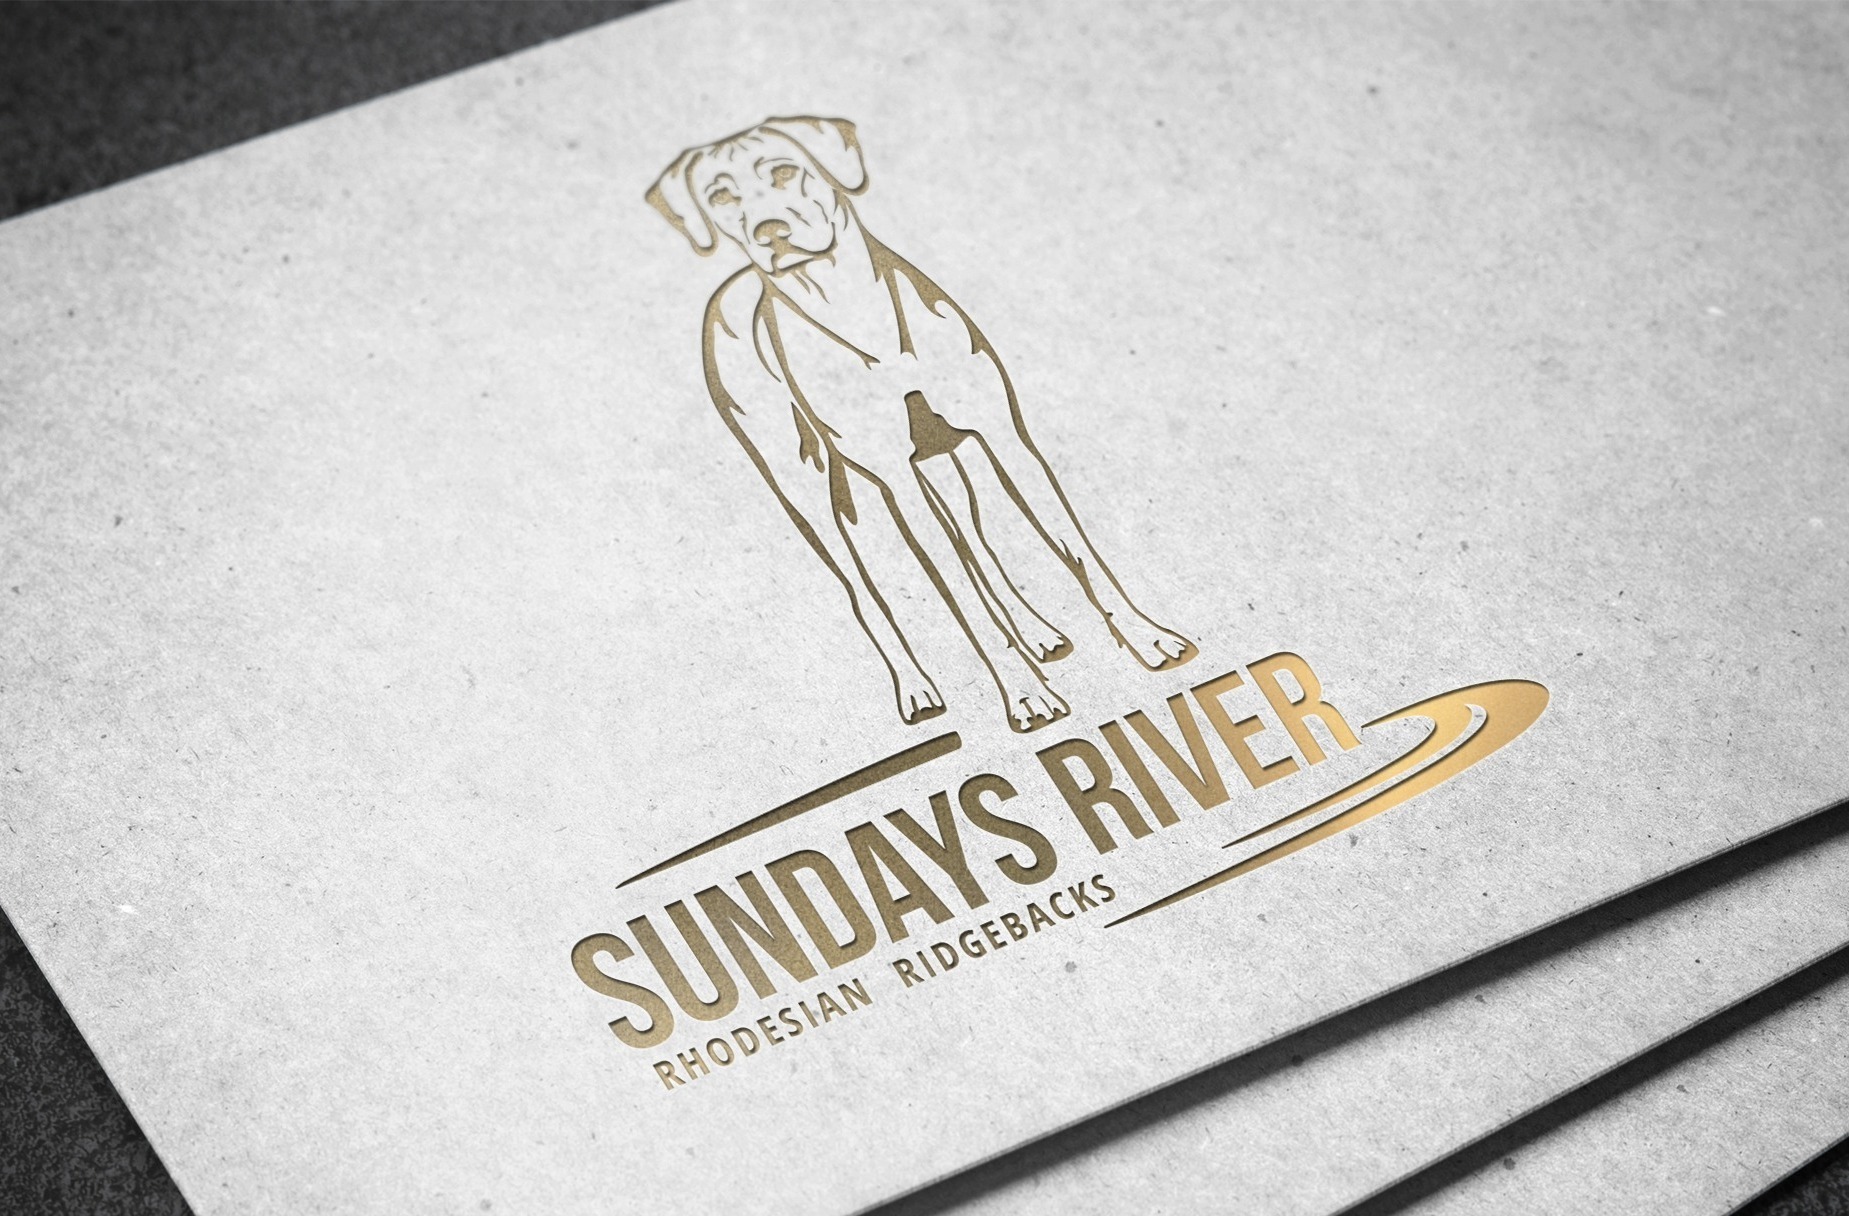 Sundays river kennel logo